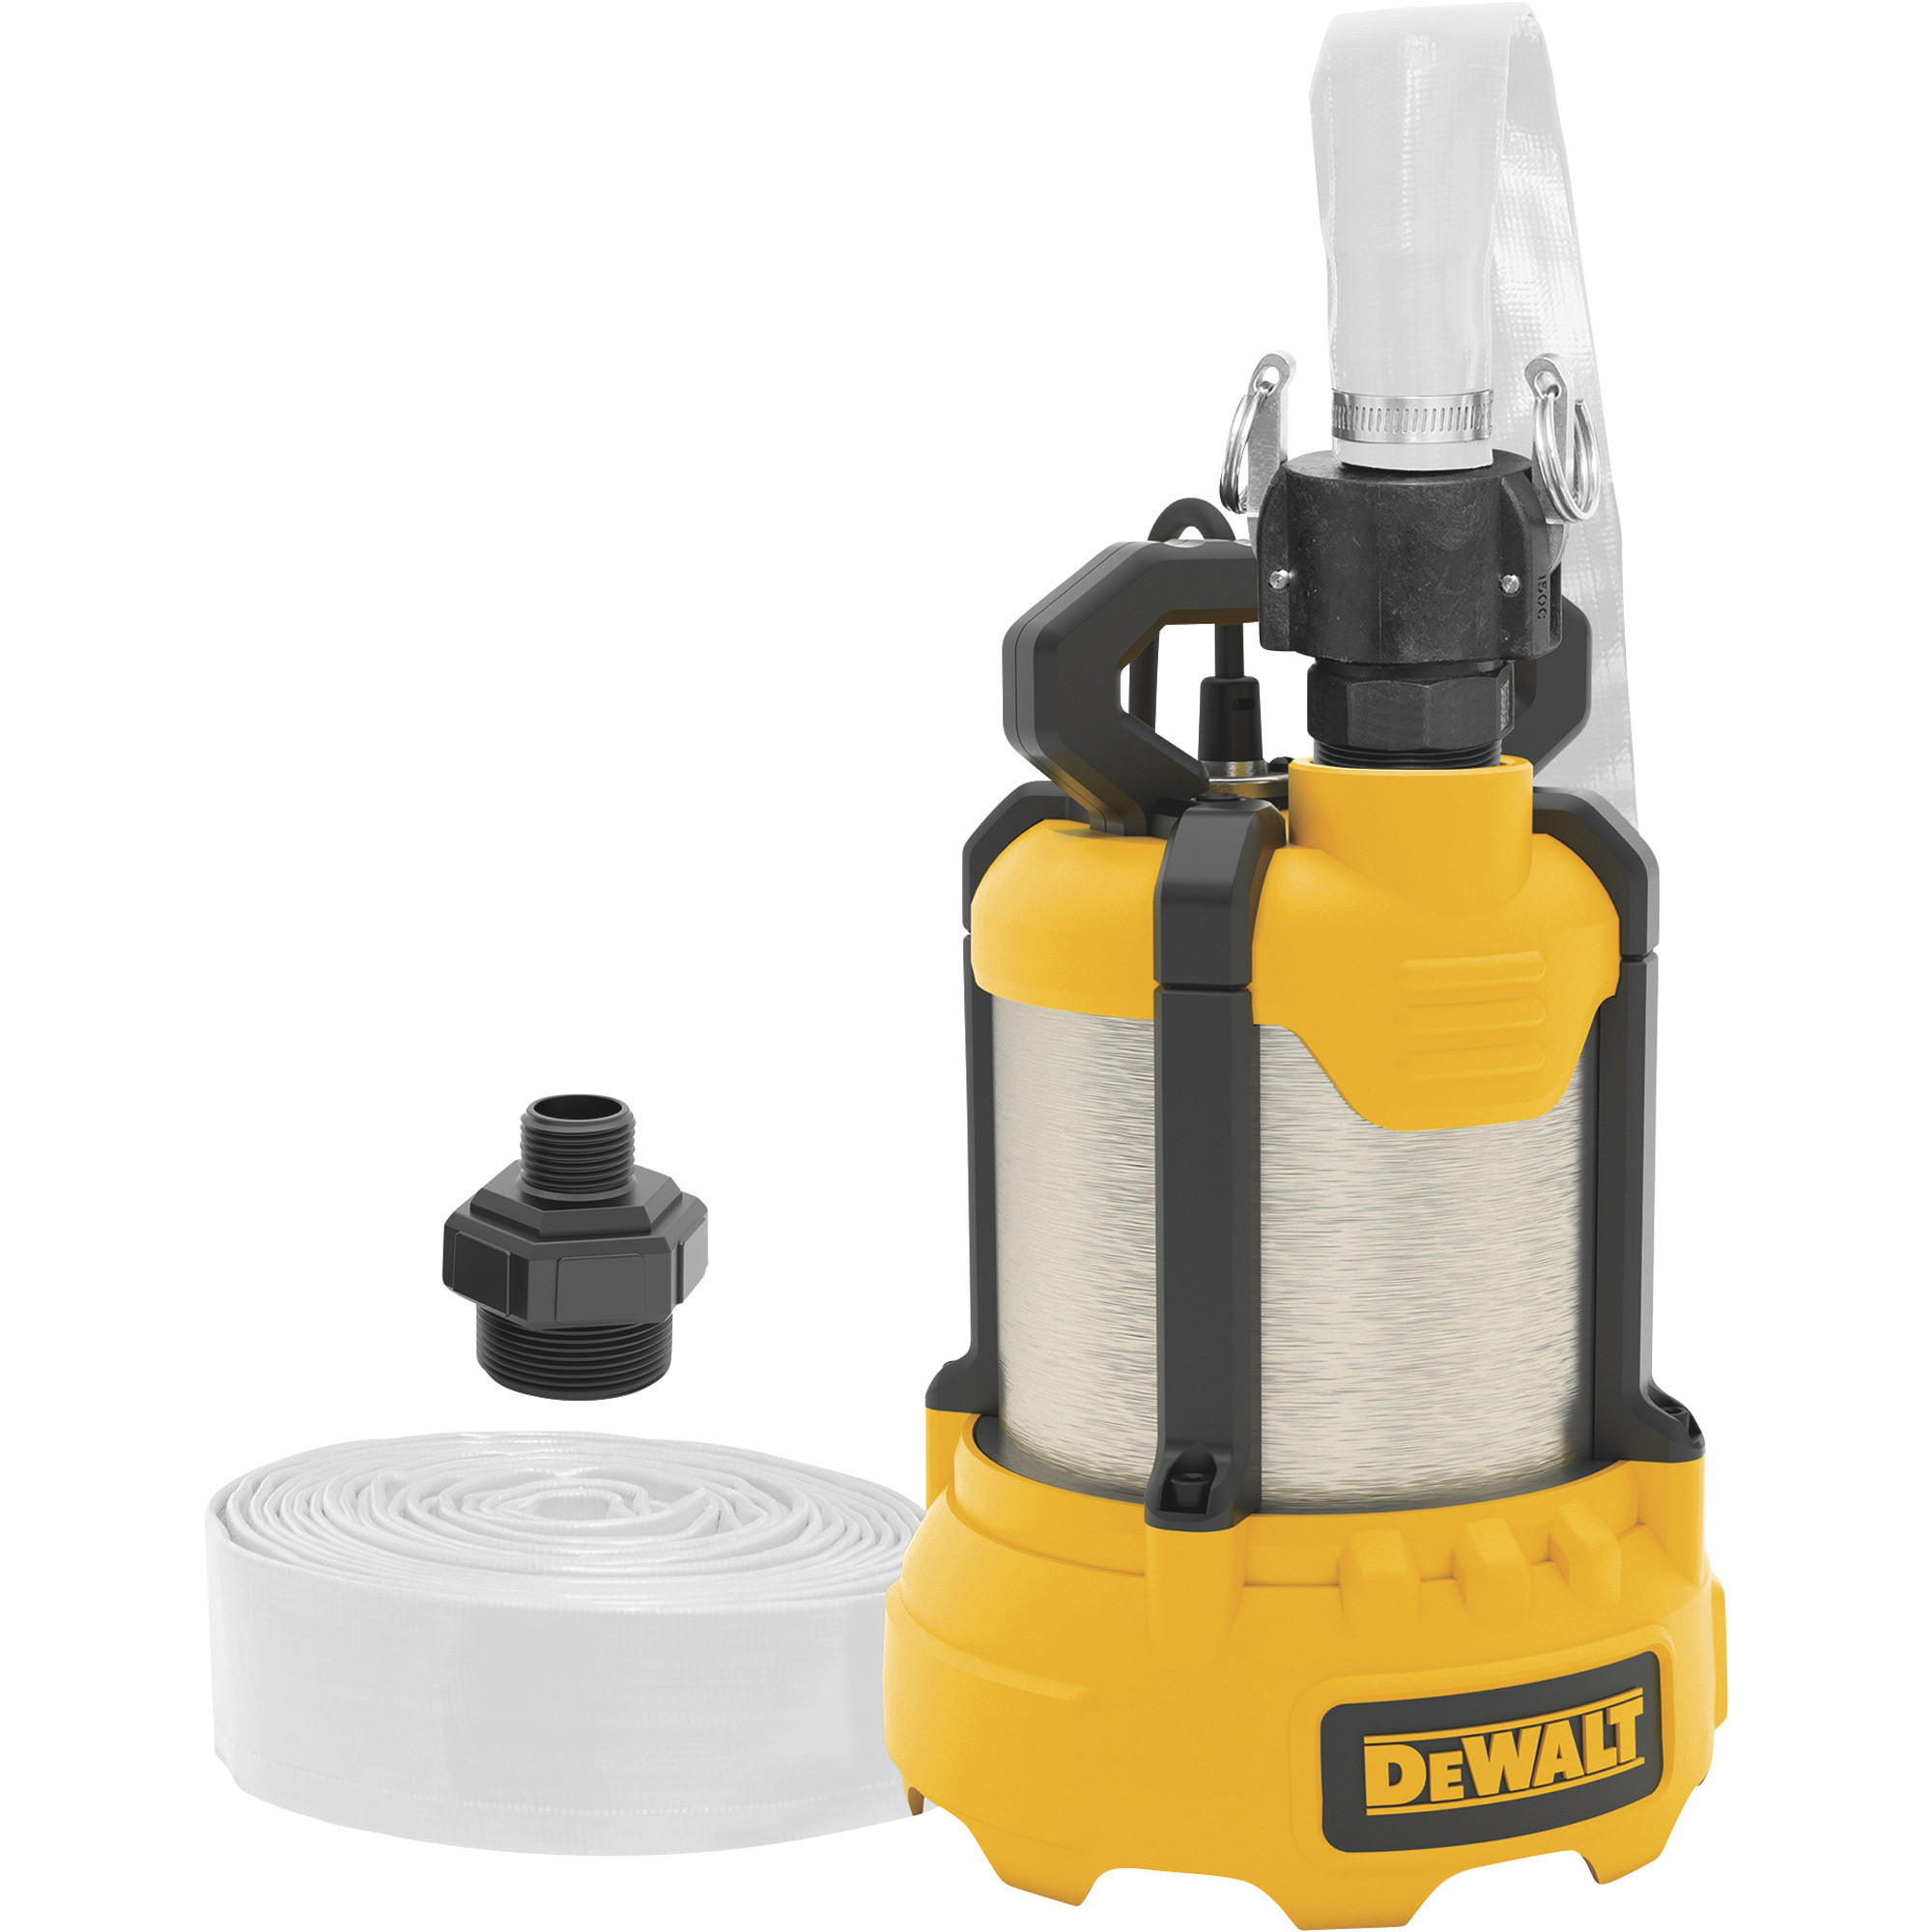 DEWALT Submersible Utility Water Pump Kit â 3480 GPH, 1/3 HP, 25ft. Hose, Model DXWP61379